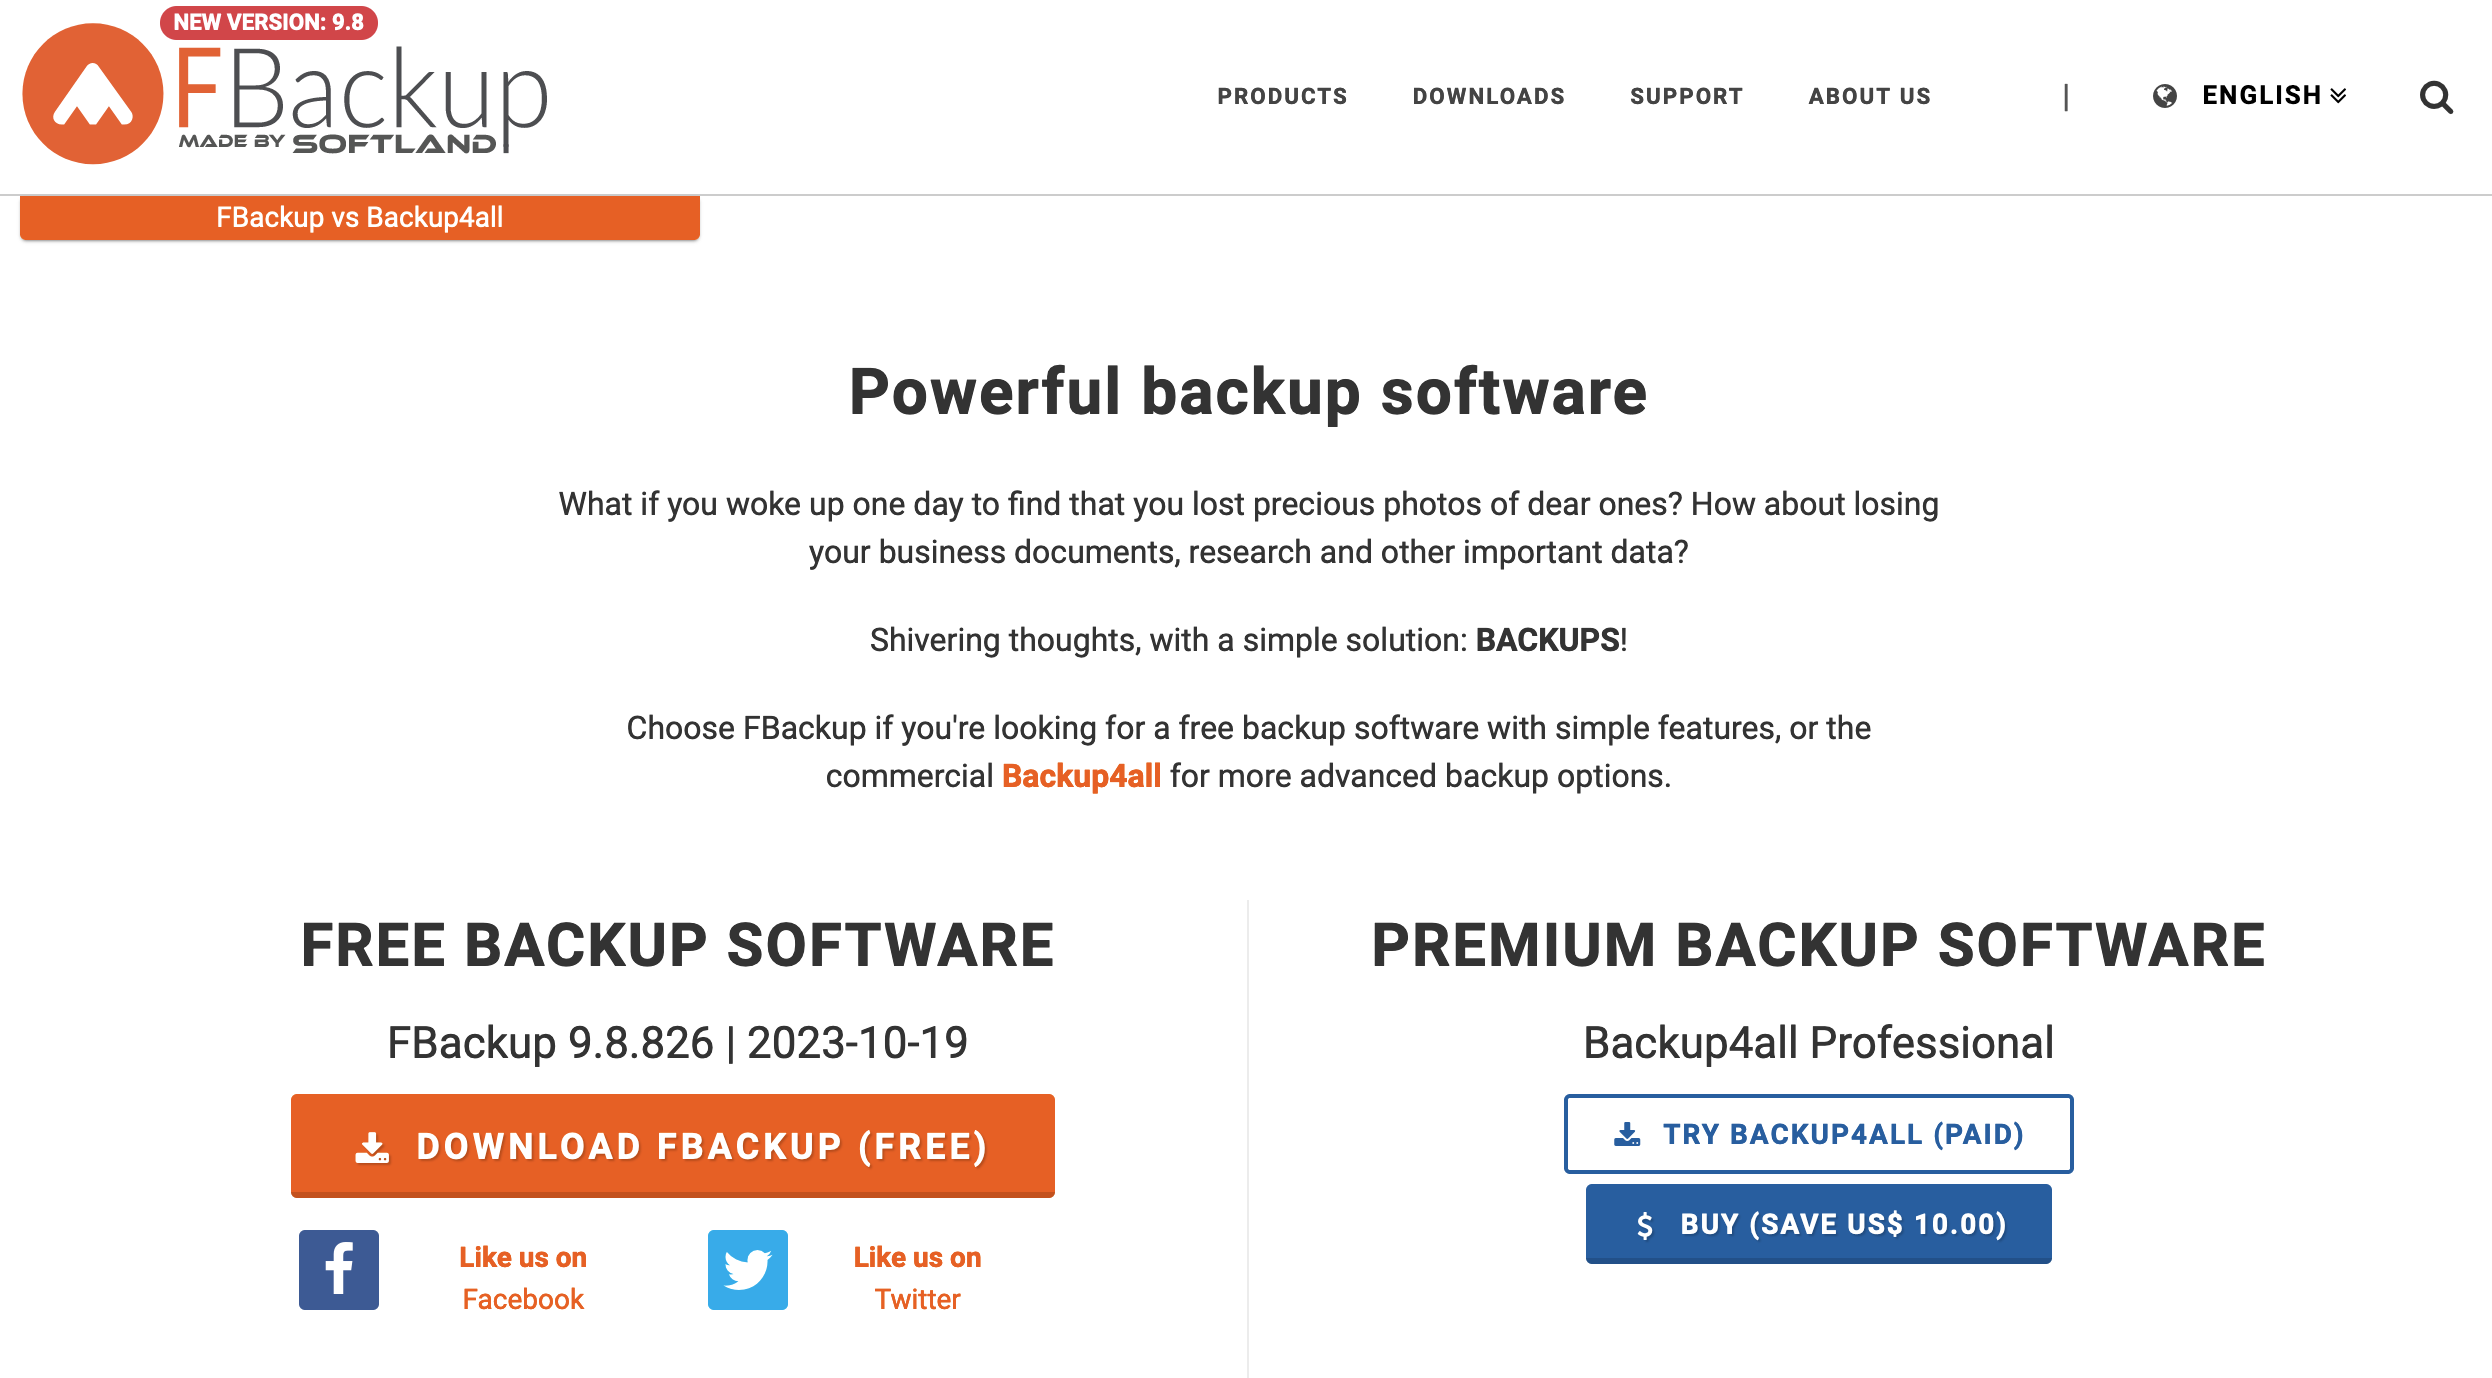 Fbackup 9 - Best free Windows backup